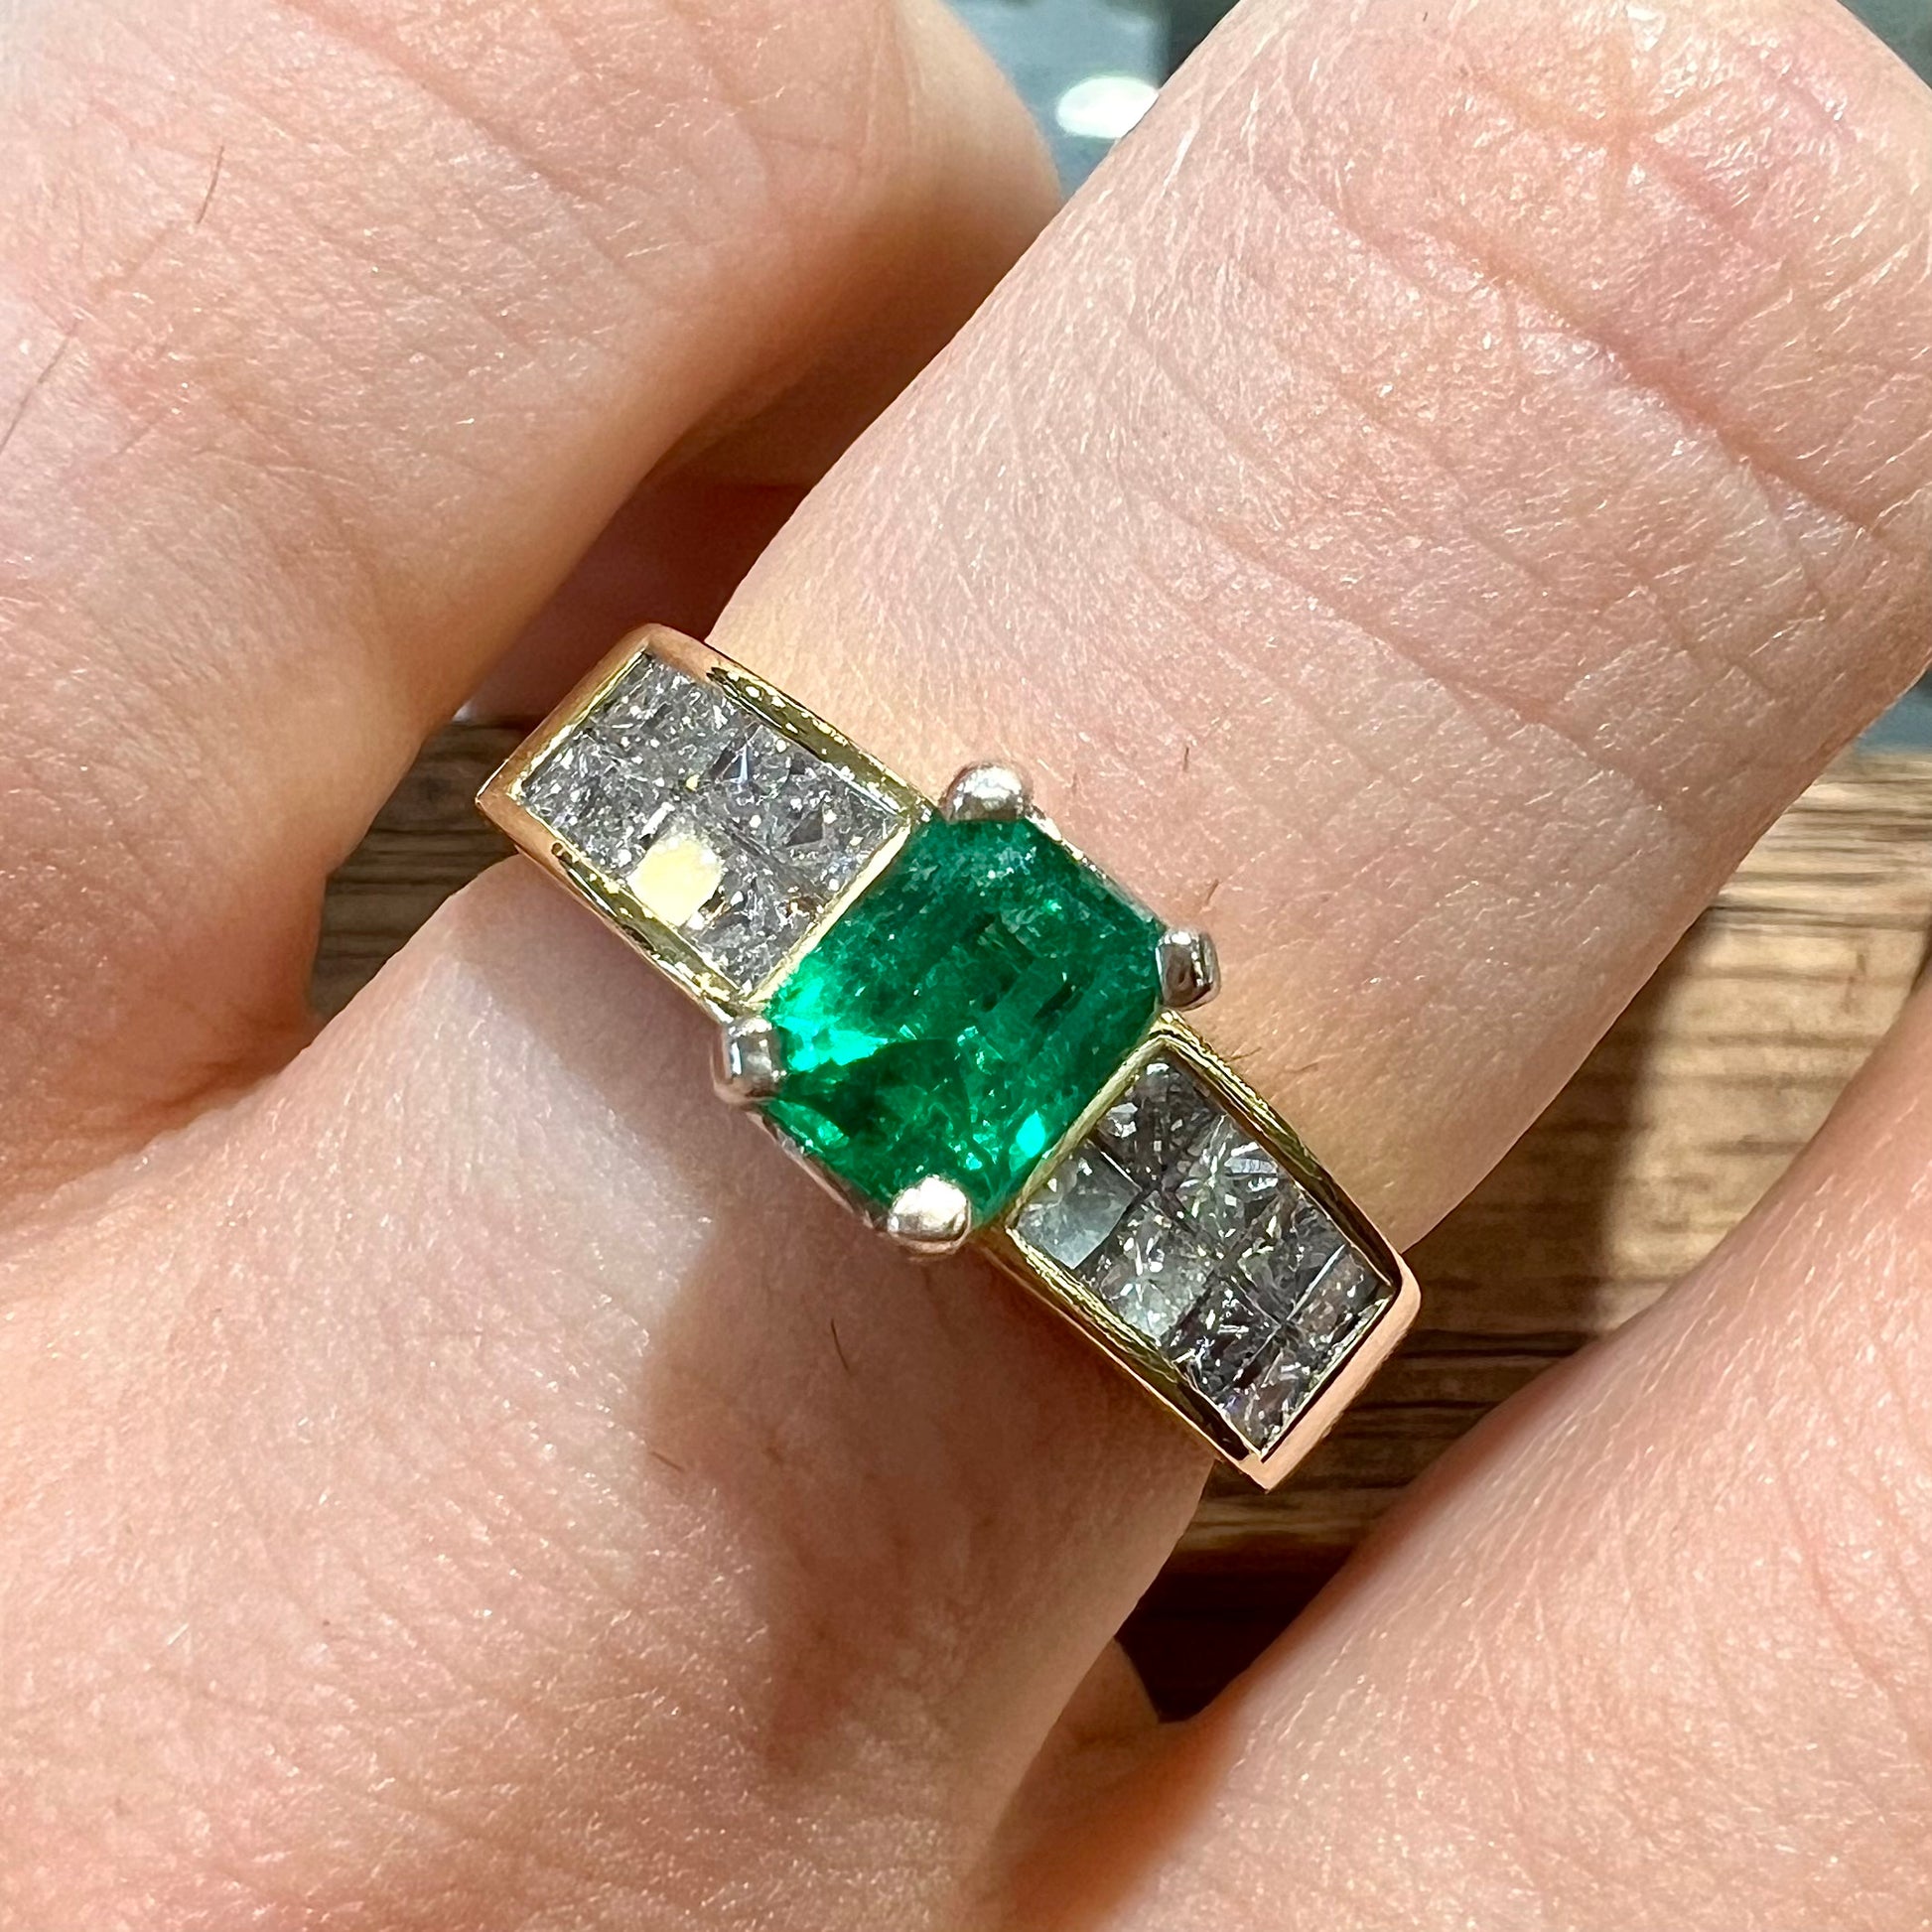 An 18 karat yellow gold ladies' emerald ring, channel set with princess cut diamonds.